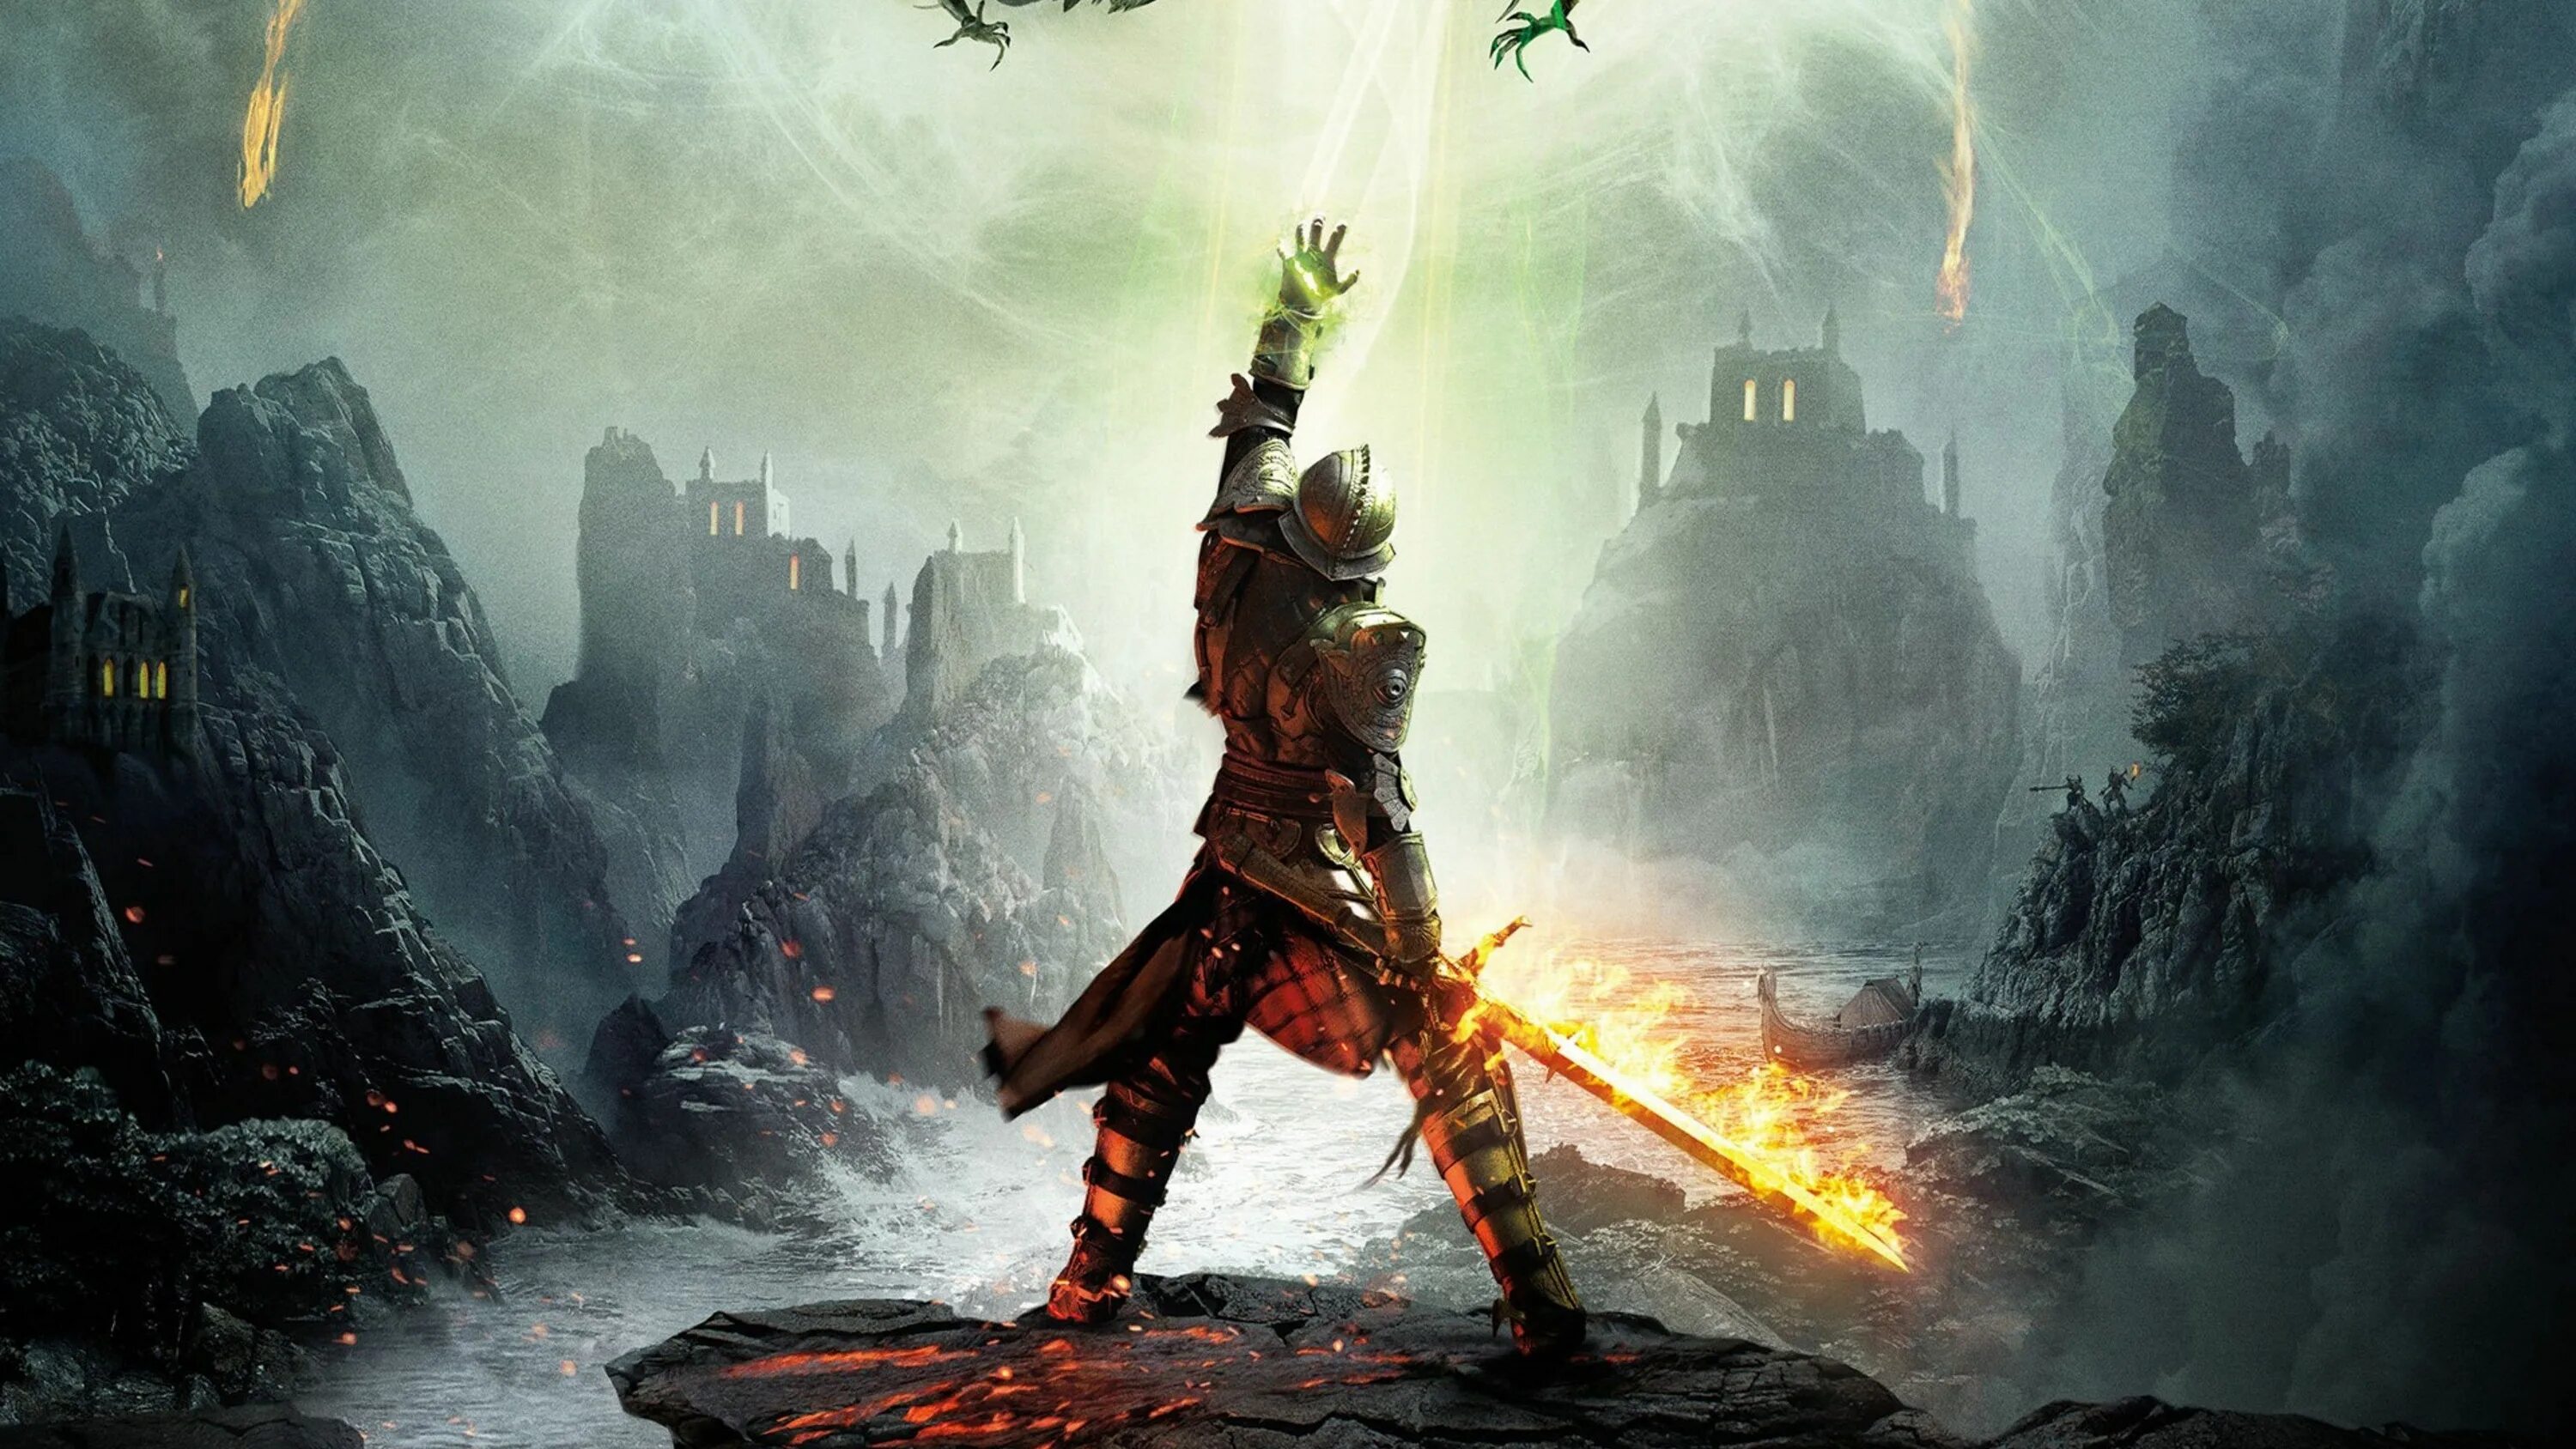 Dragon age: Inquisition. Инквизиция даргонадже. Dragon age: Inquisition (2014). Игра Dragon age инквизиция. 1400 игр